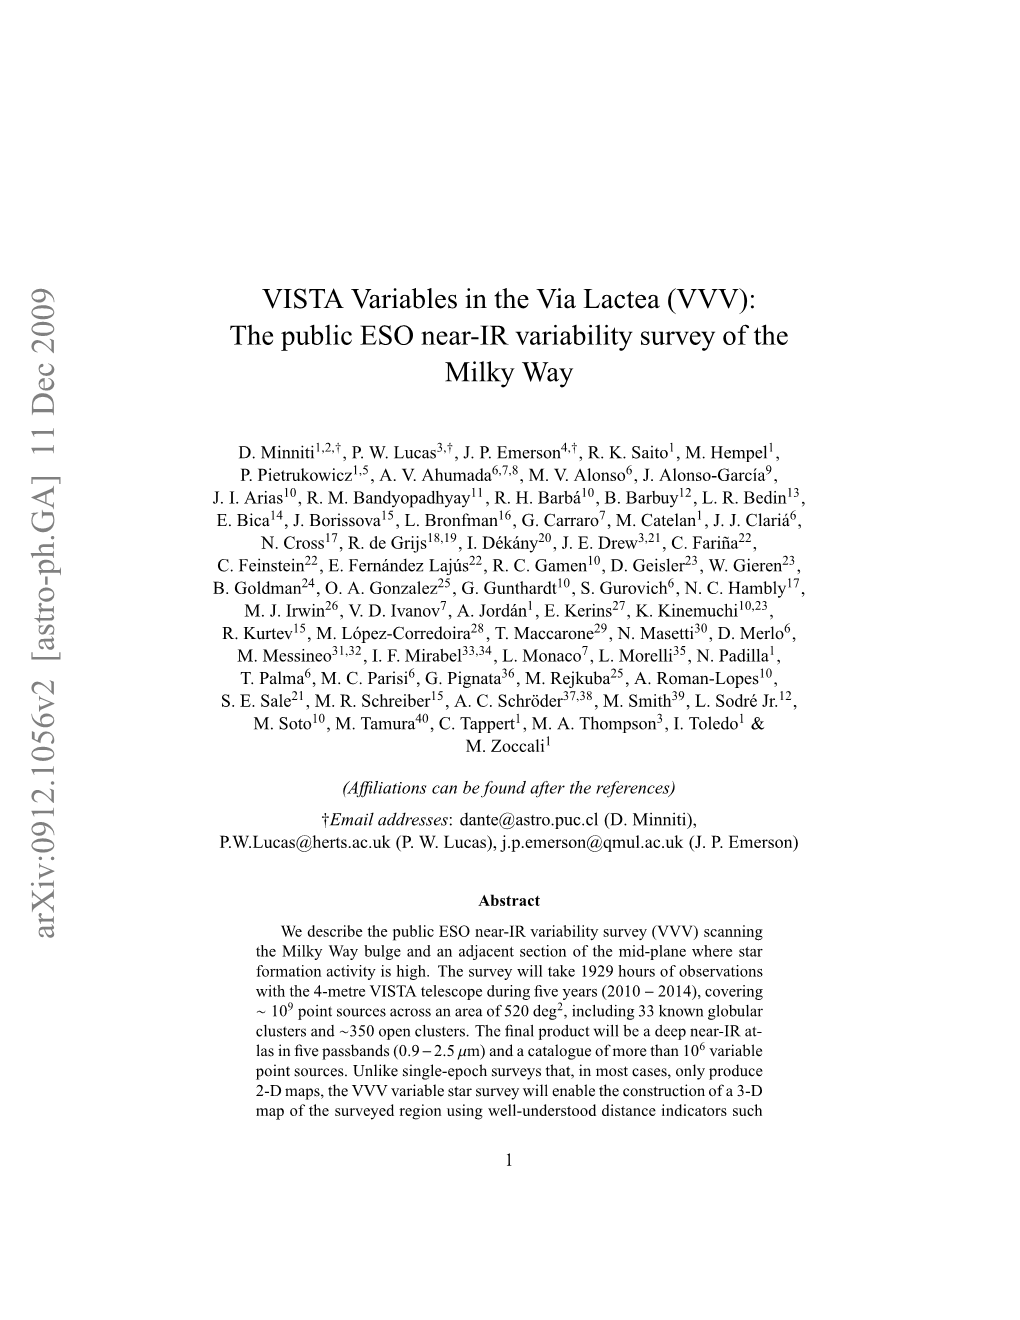 The Public ESO Near-IR Variability Survey of the Milky